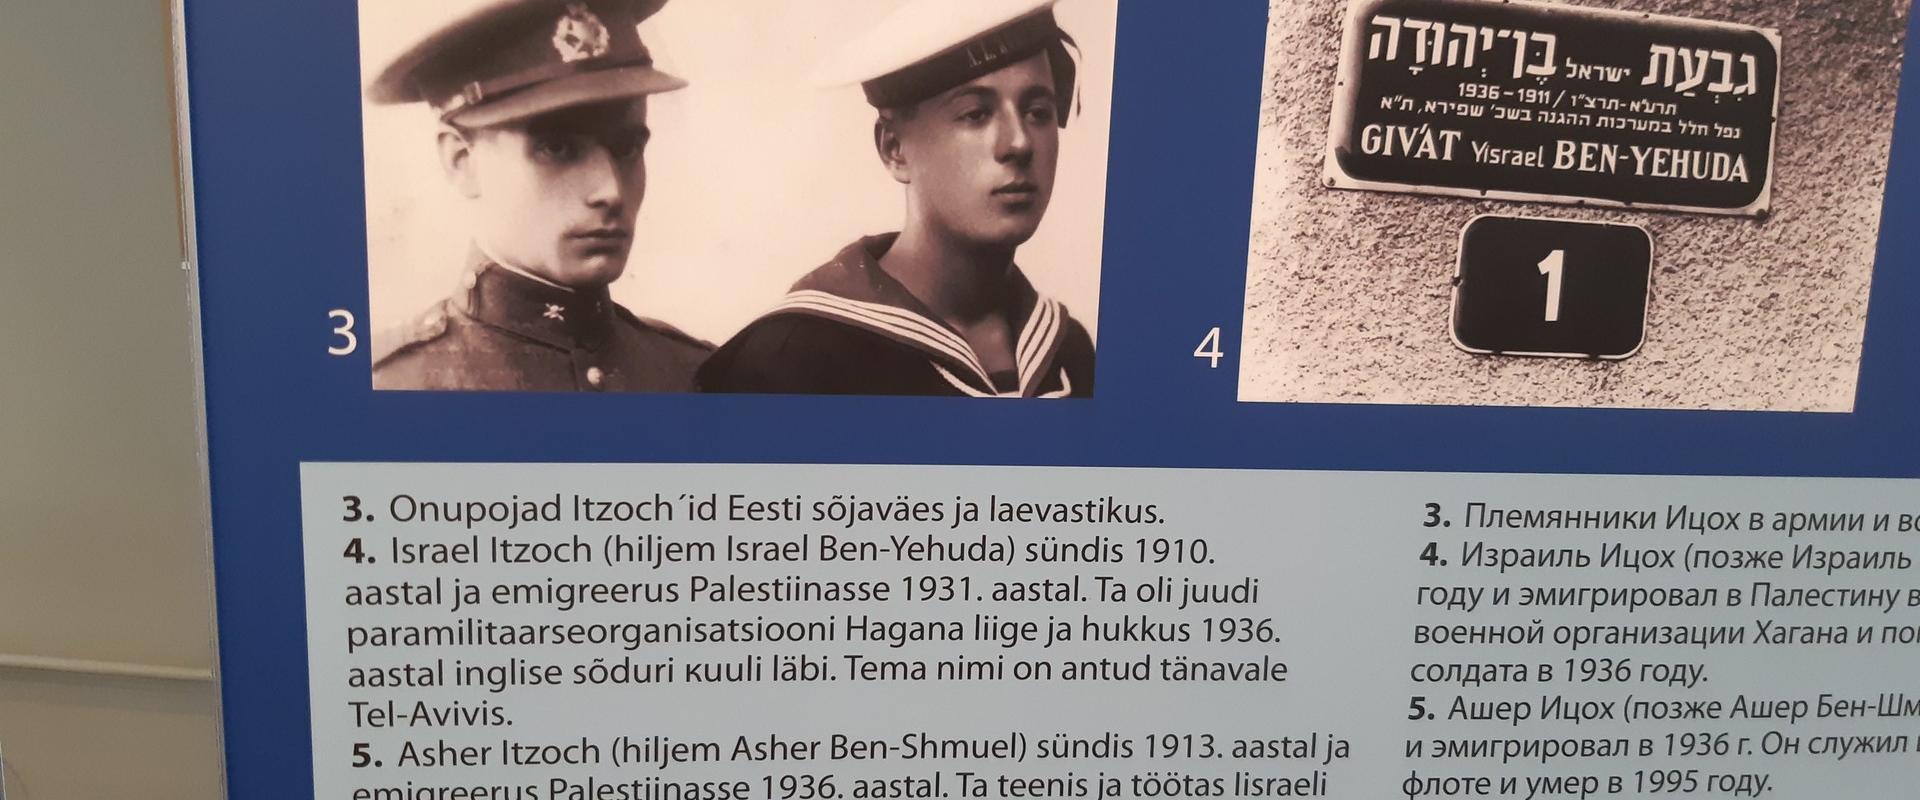 Estonian Jewish Museum